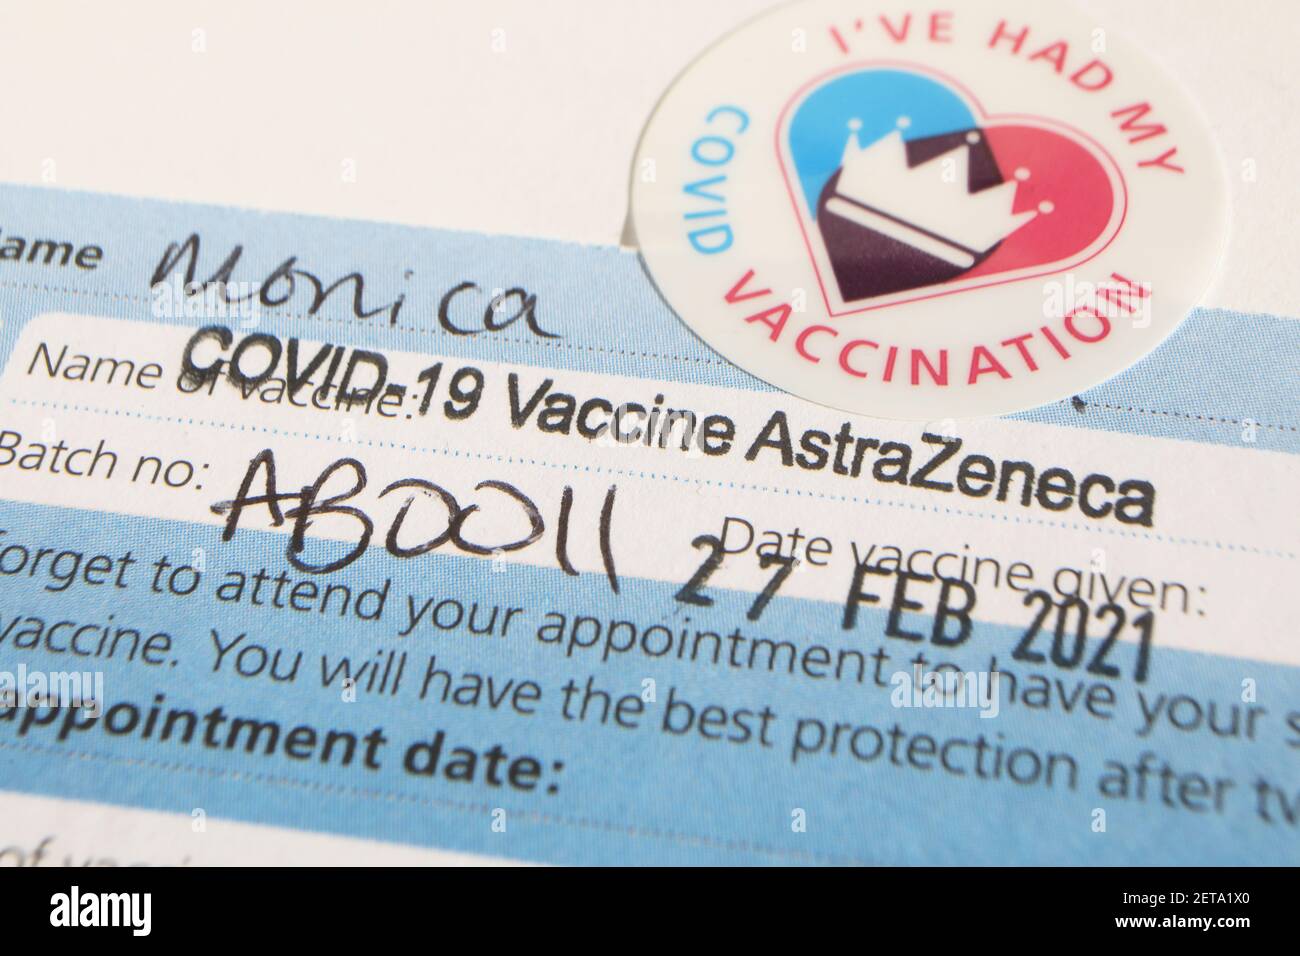 Covid vaccine appt card, UK Stock Photo